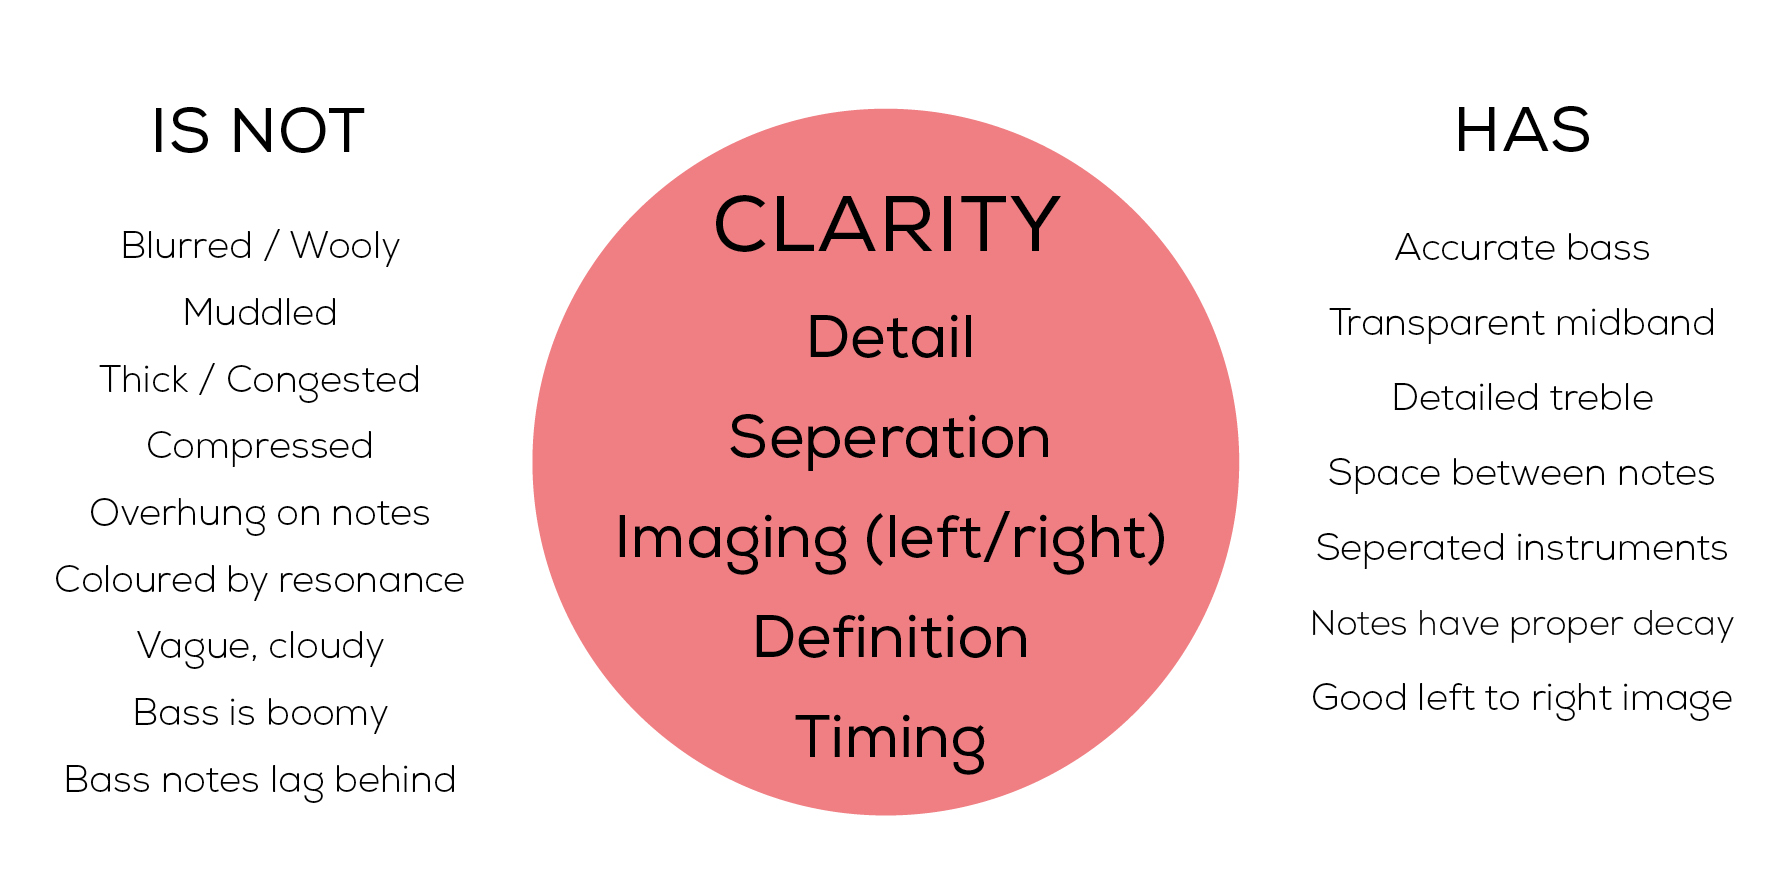 Diagram expanding qualities of Clarity